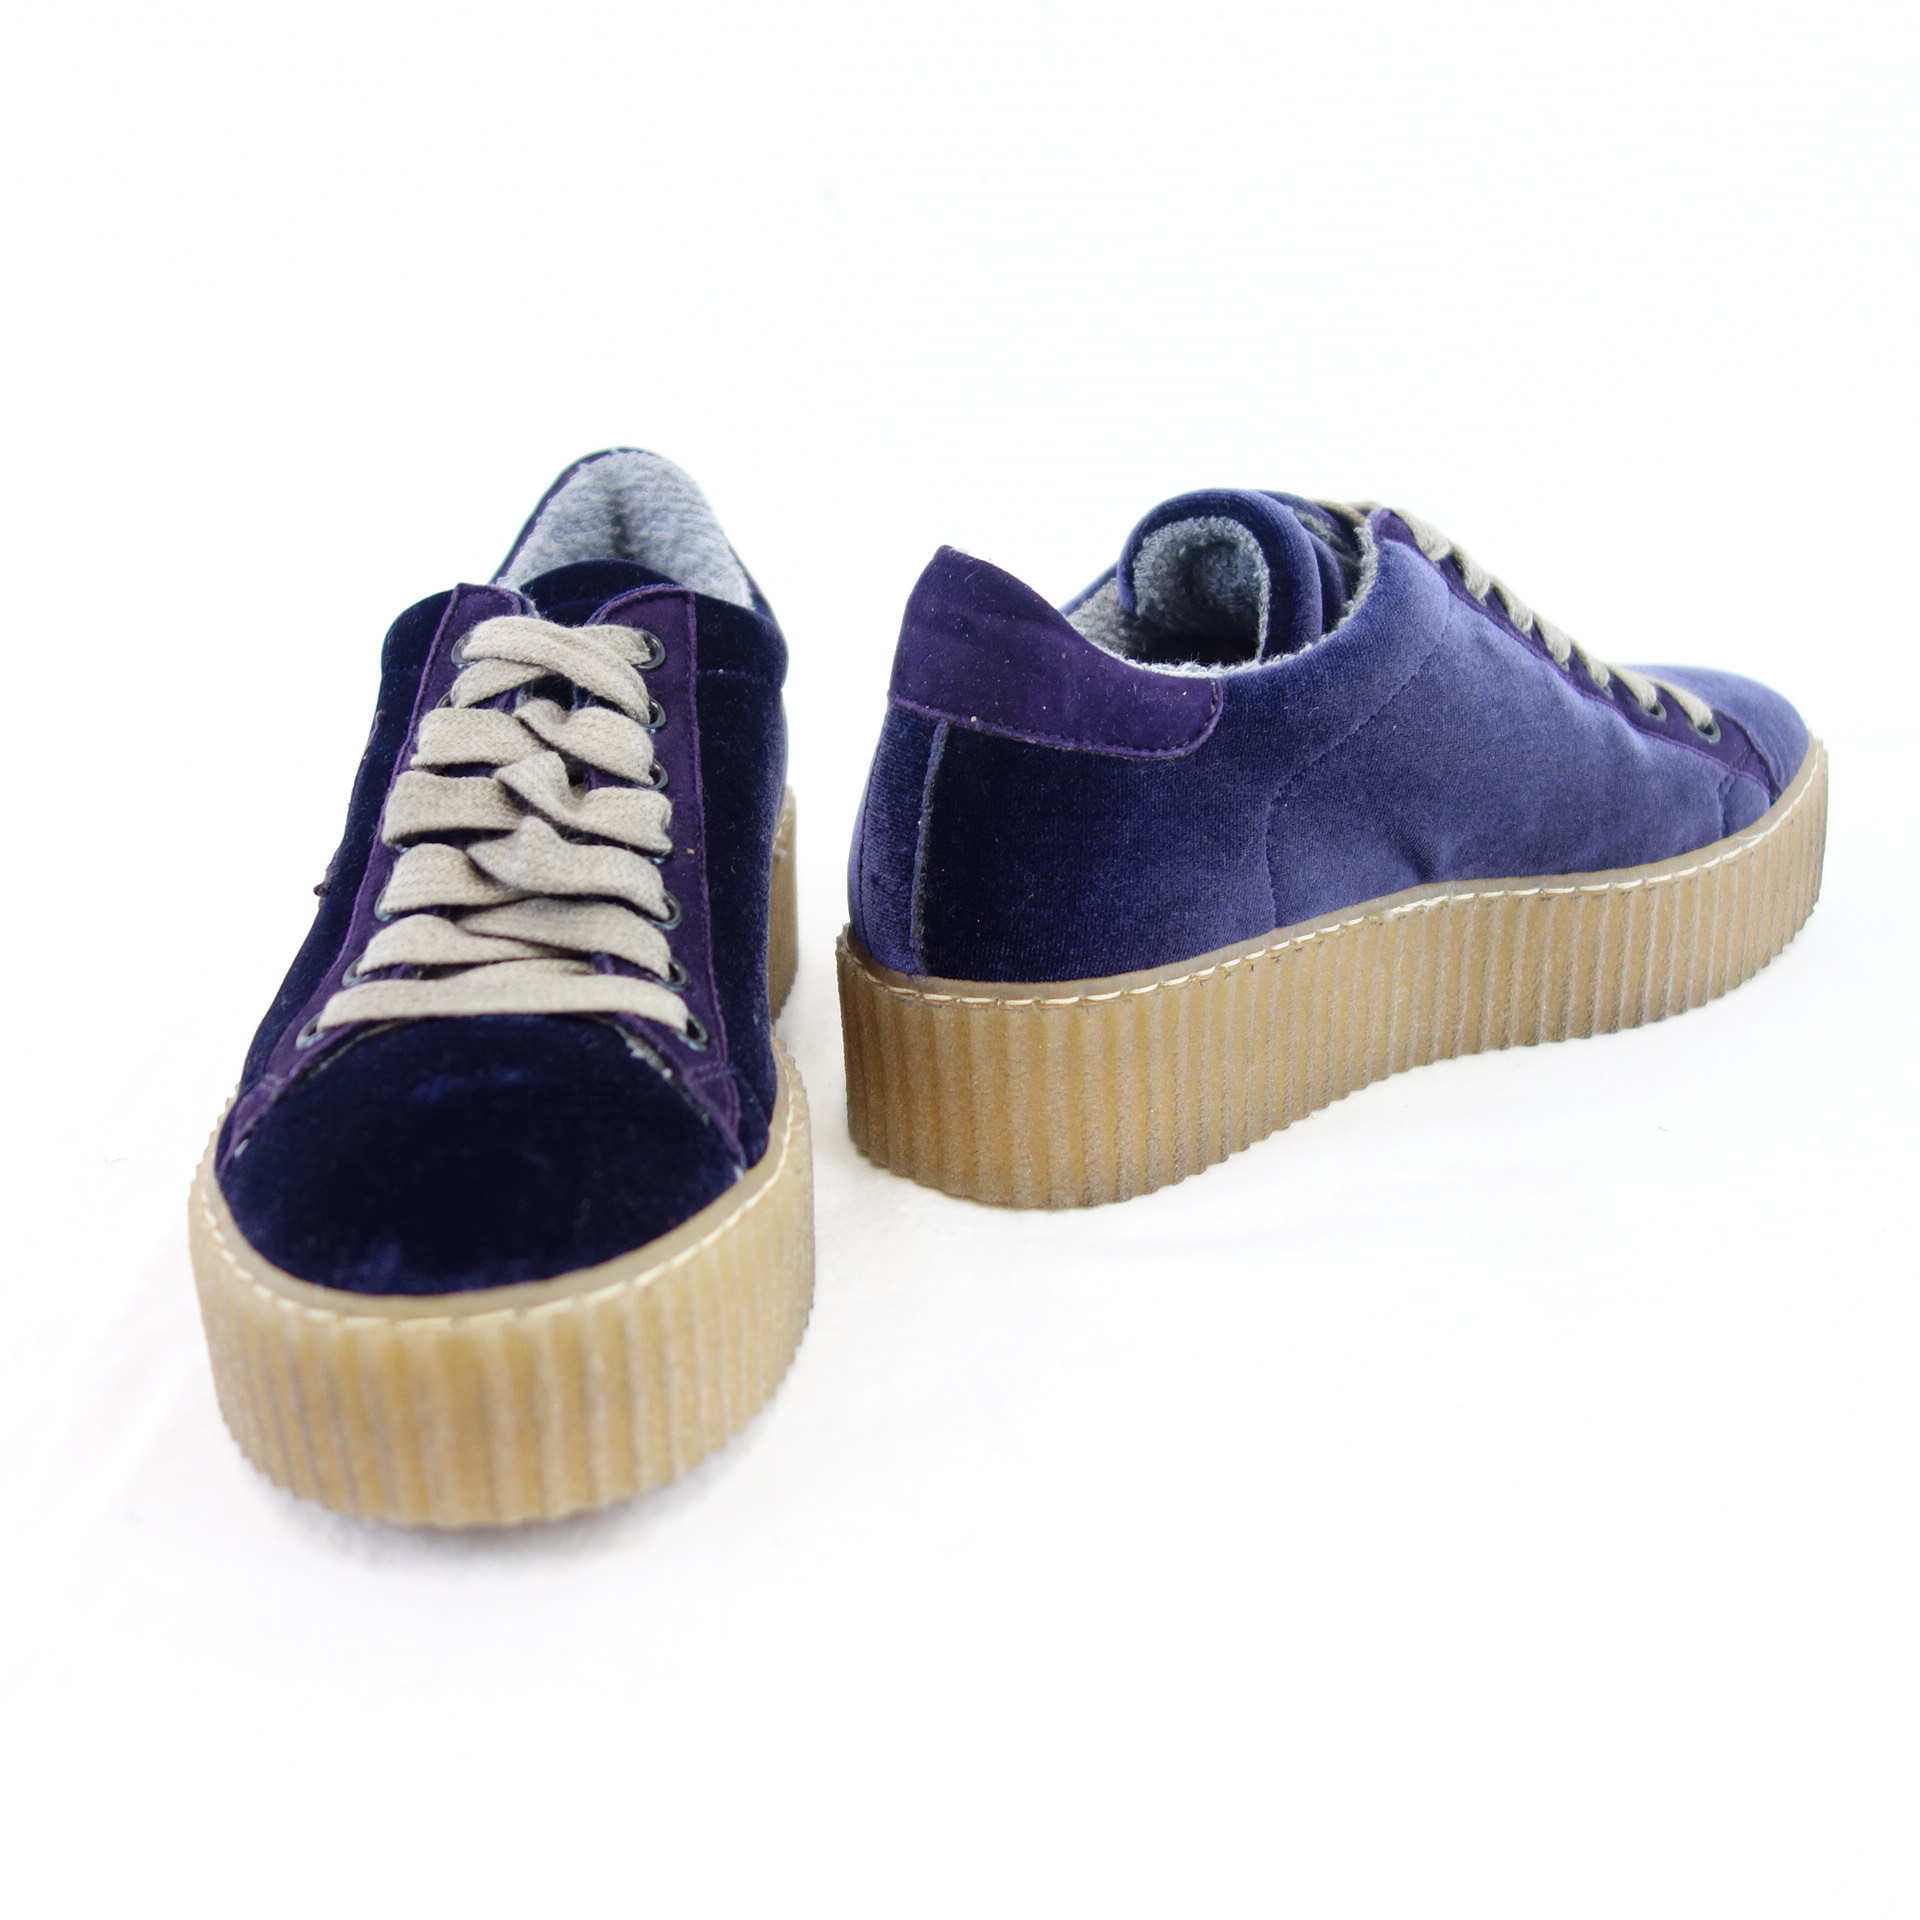 MELINE Méliné Damen Schuhe Sportschuhe Low Top Sneaker Violett Samt Leder Gr 36